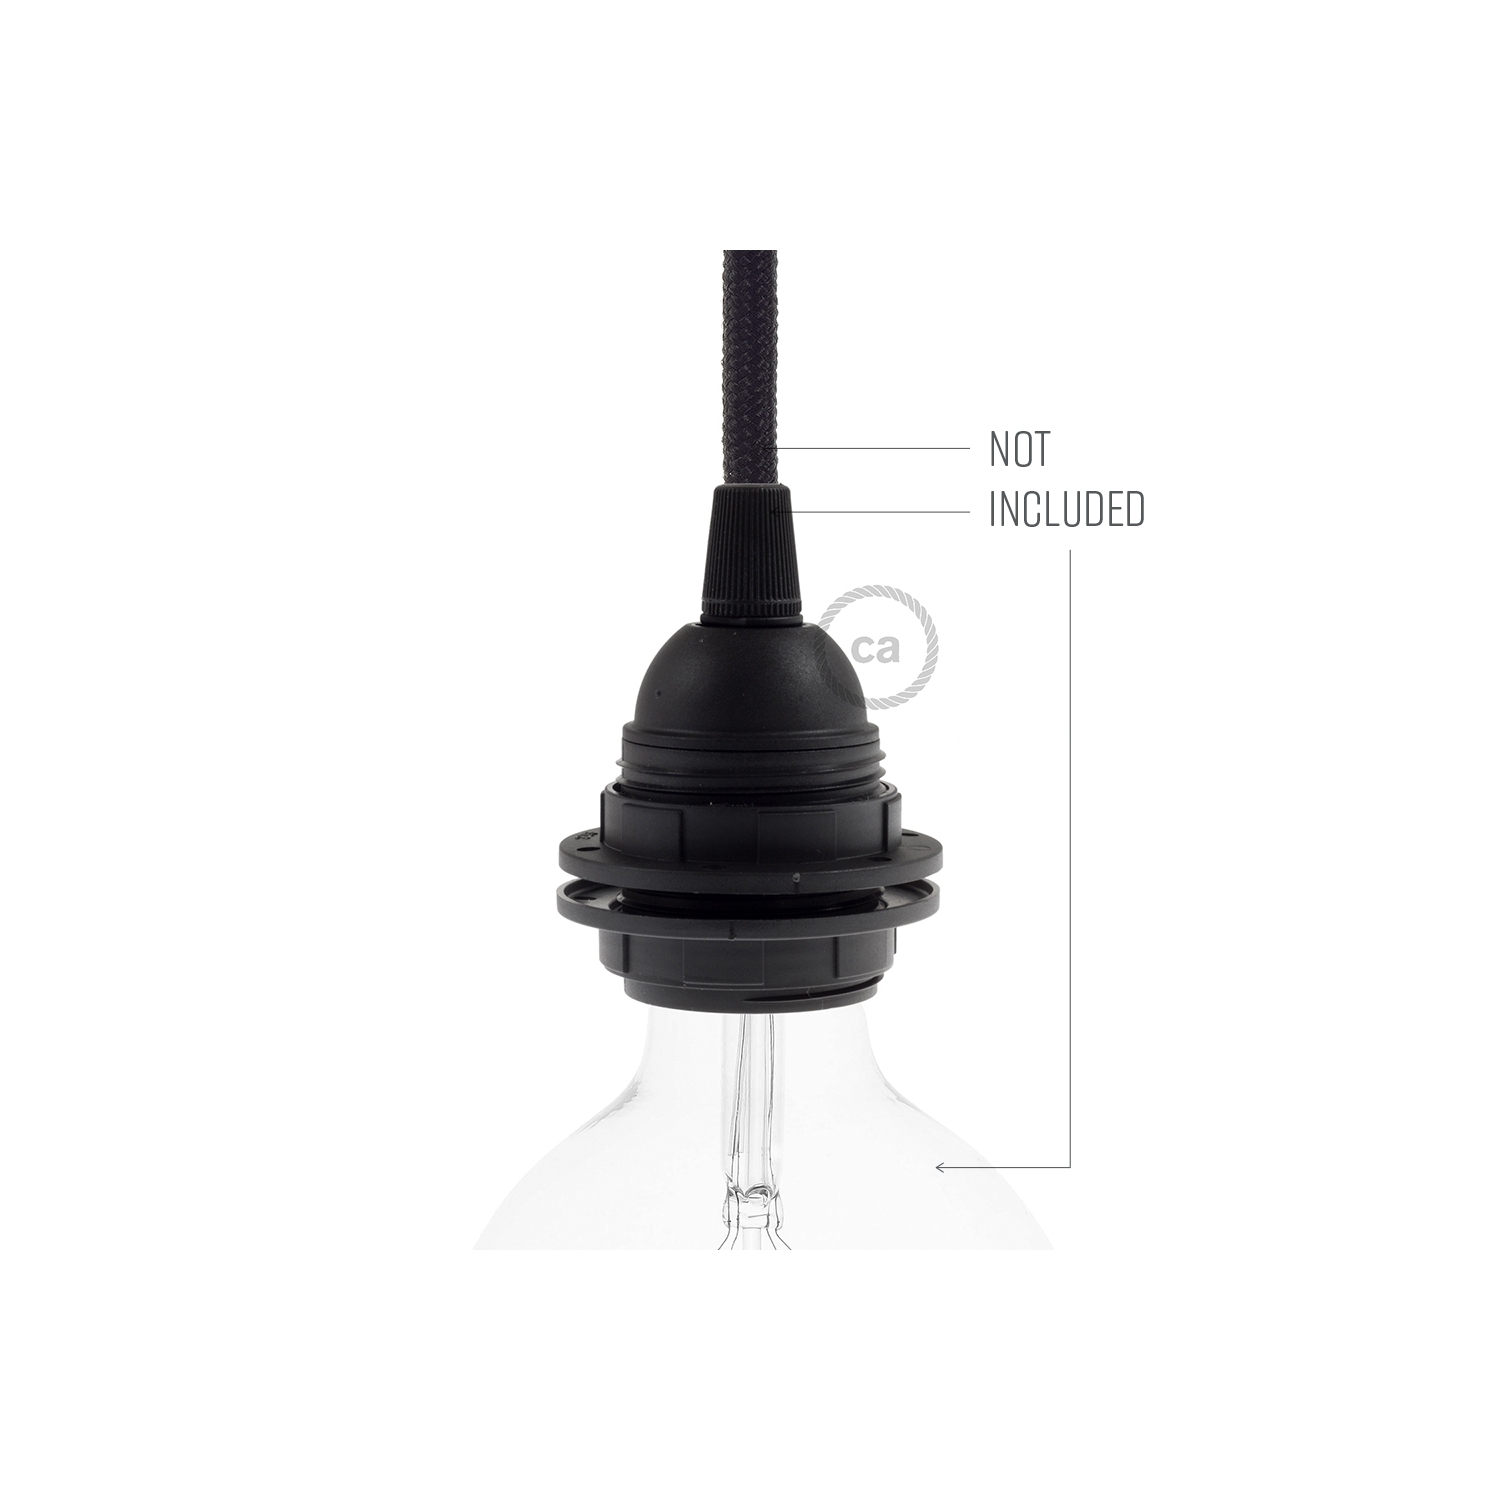 Double Ferrule Thermoplastic light bulb socket - E26